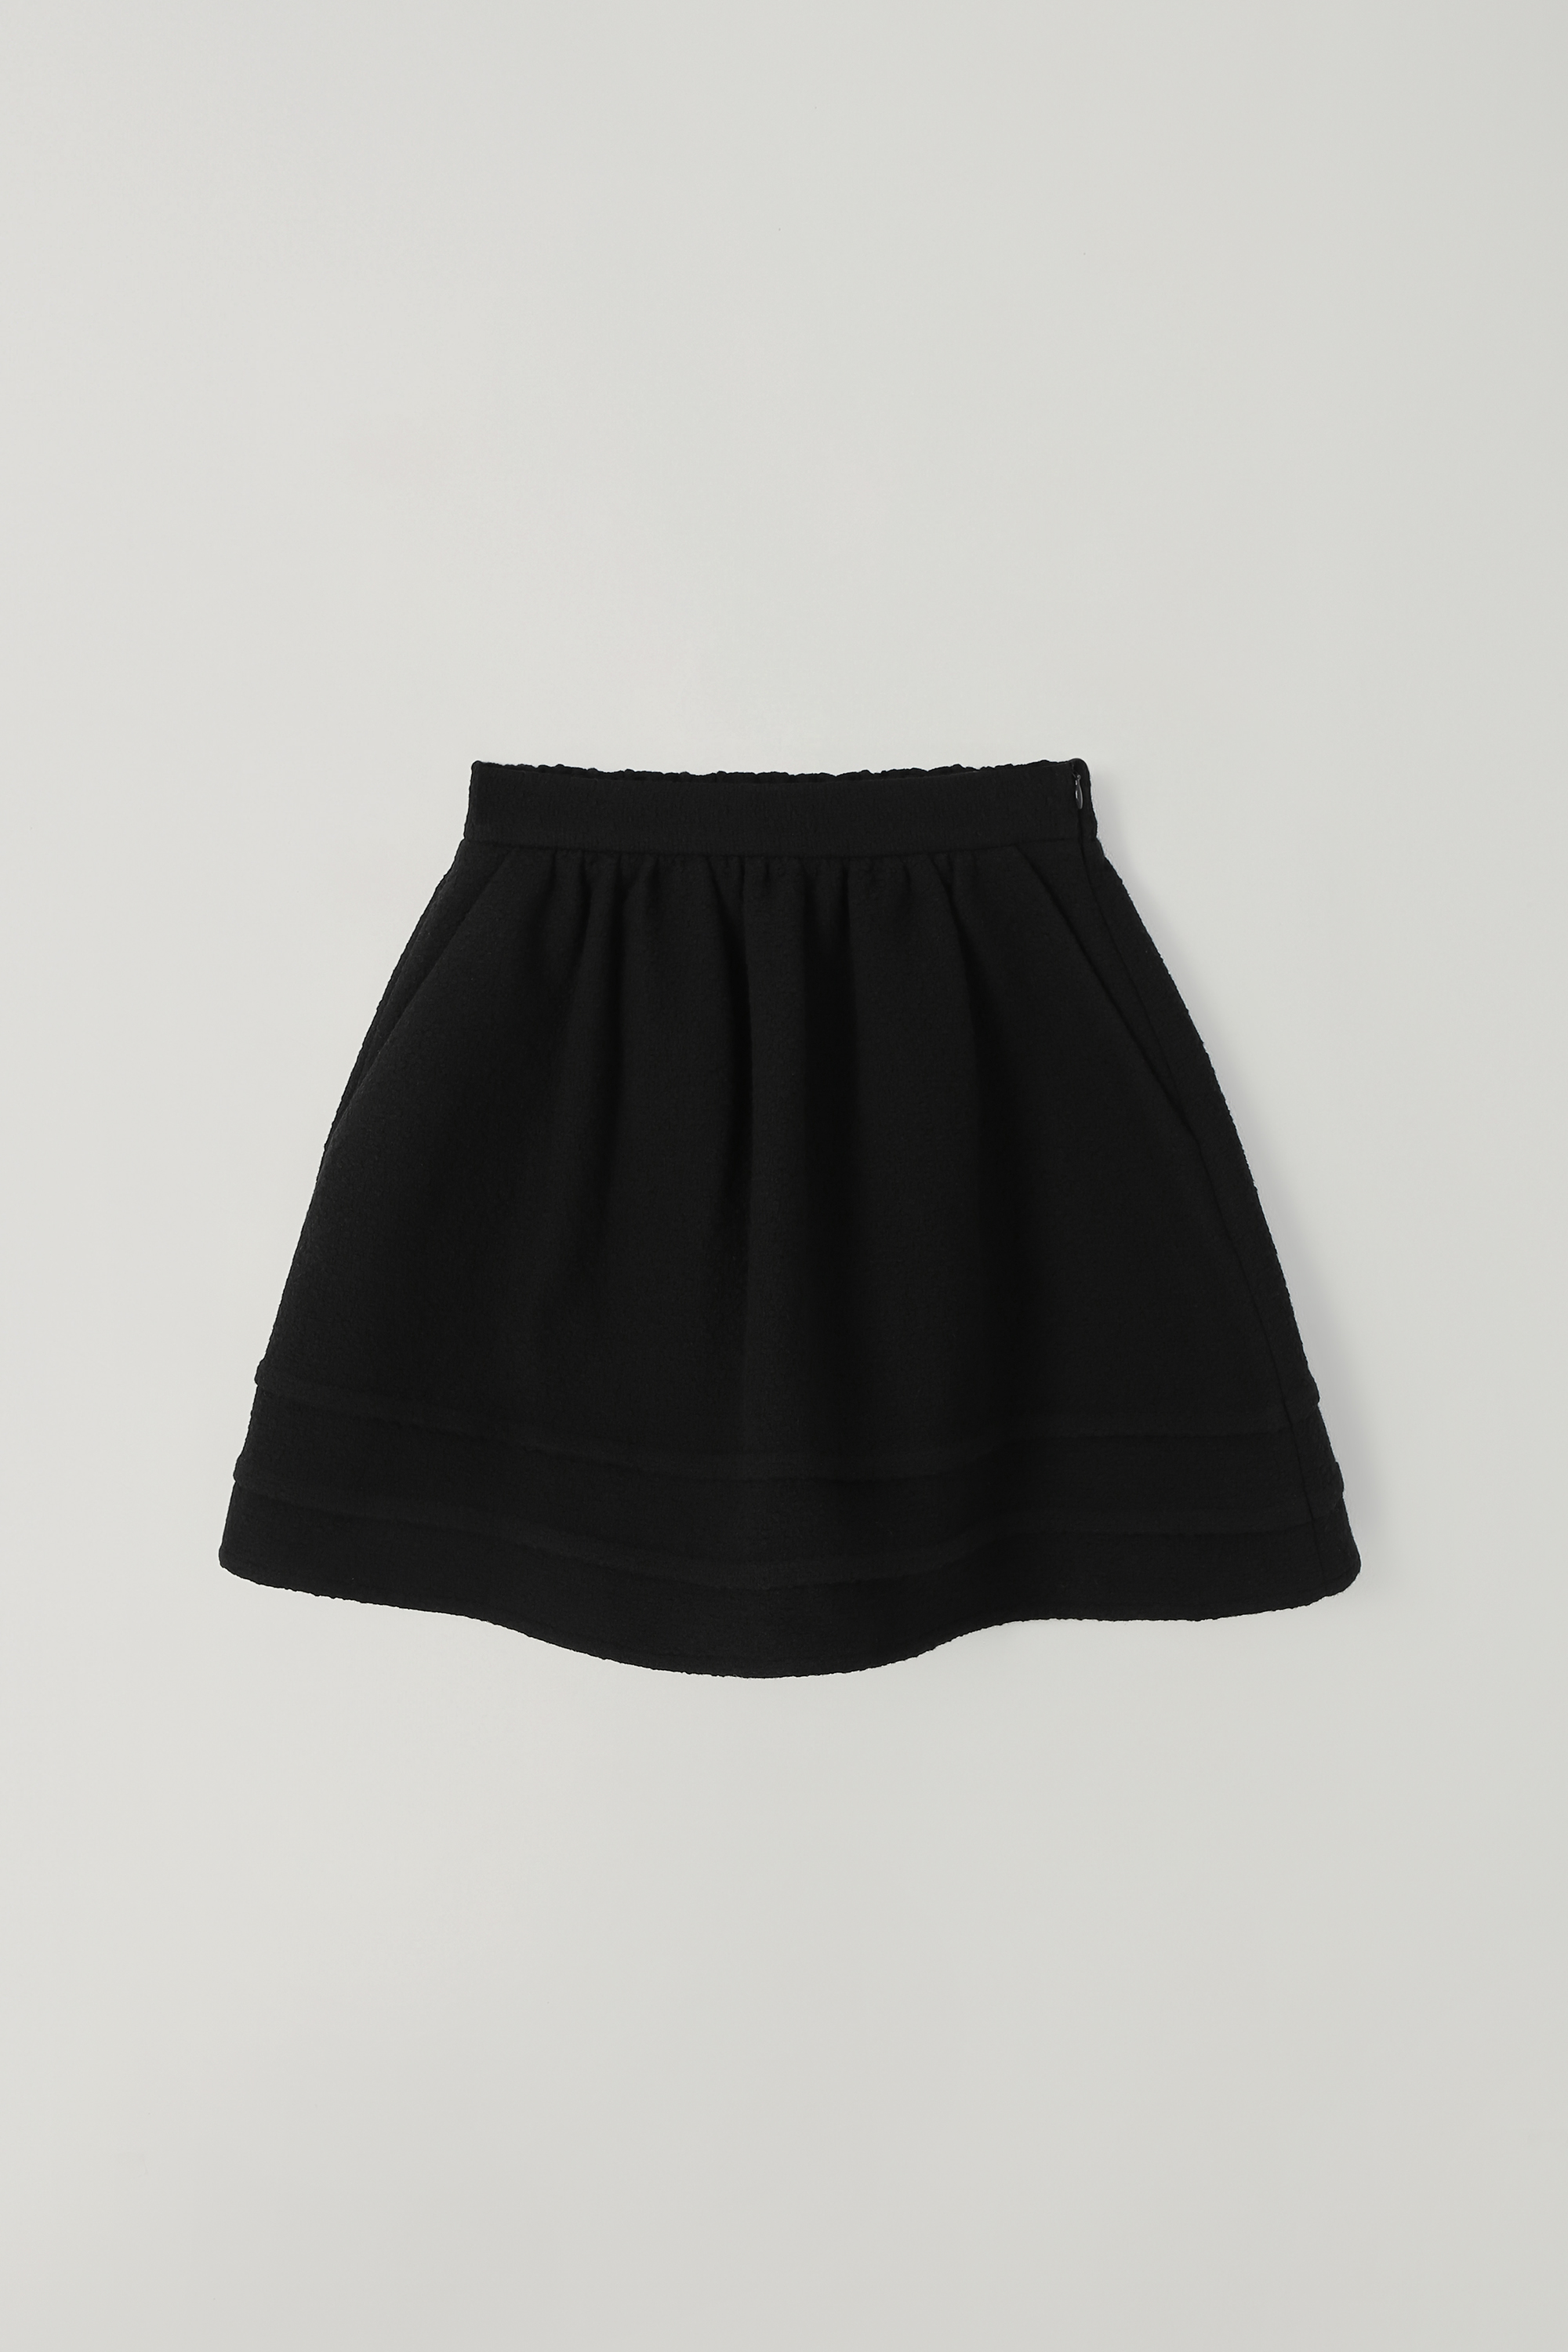 T/T Boucle flouncy skirt (black)